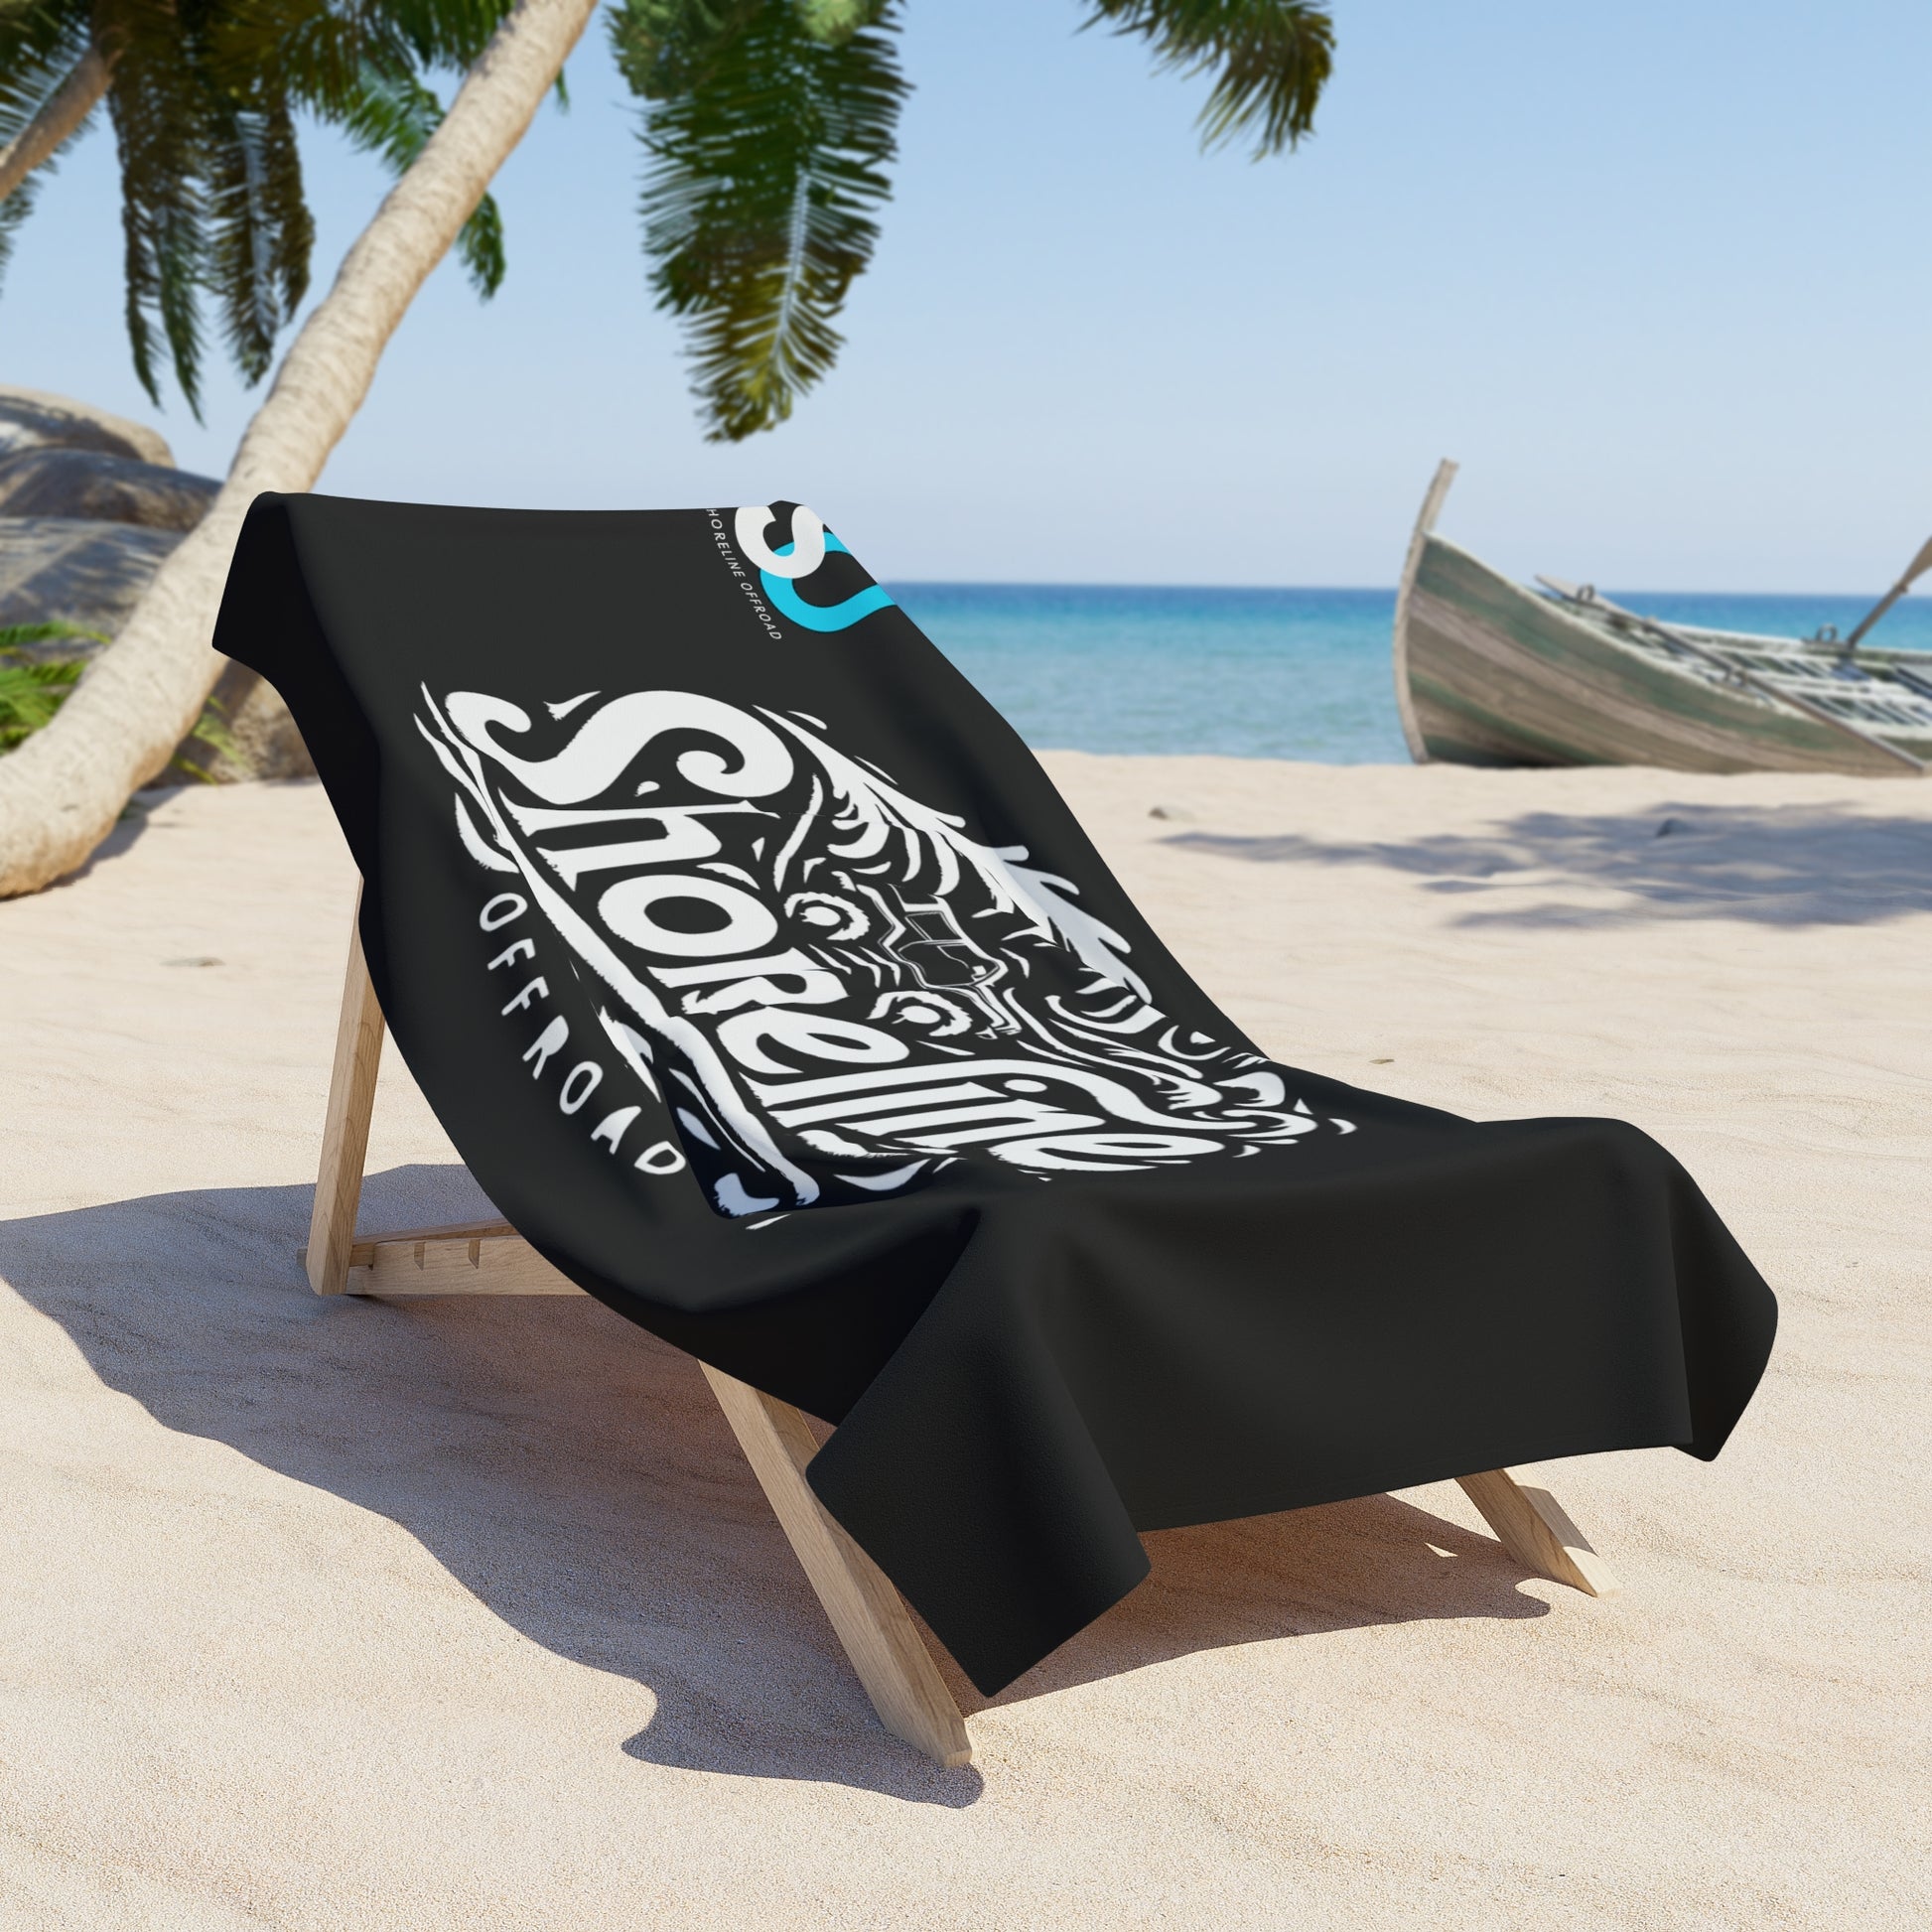 a beach chair with a black cover on a beach